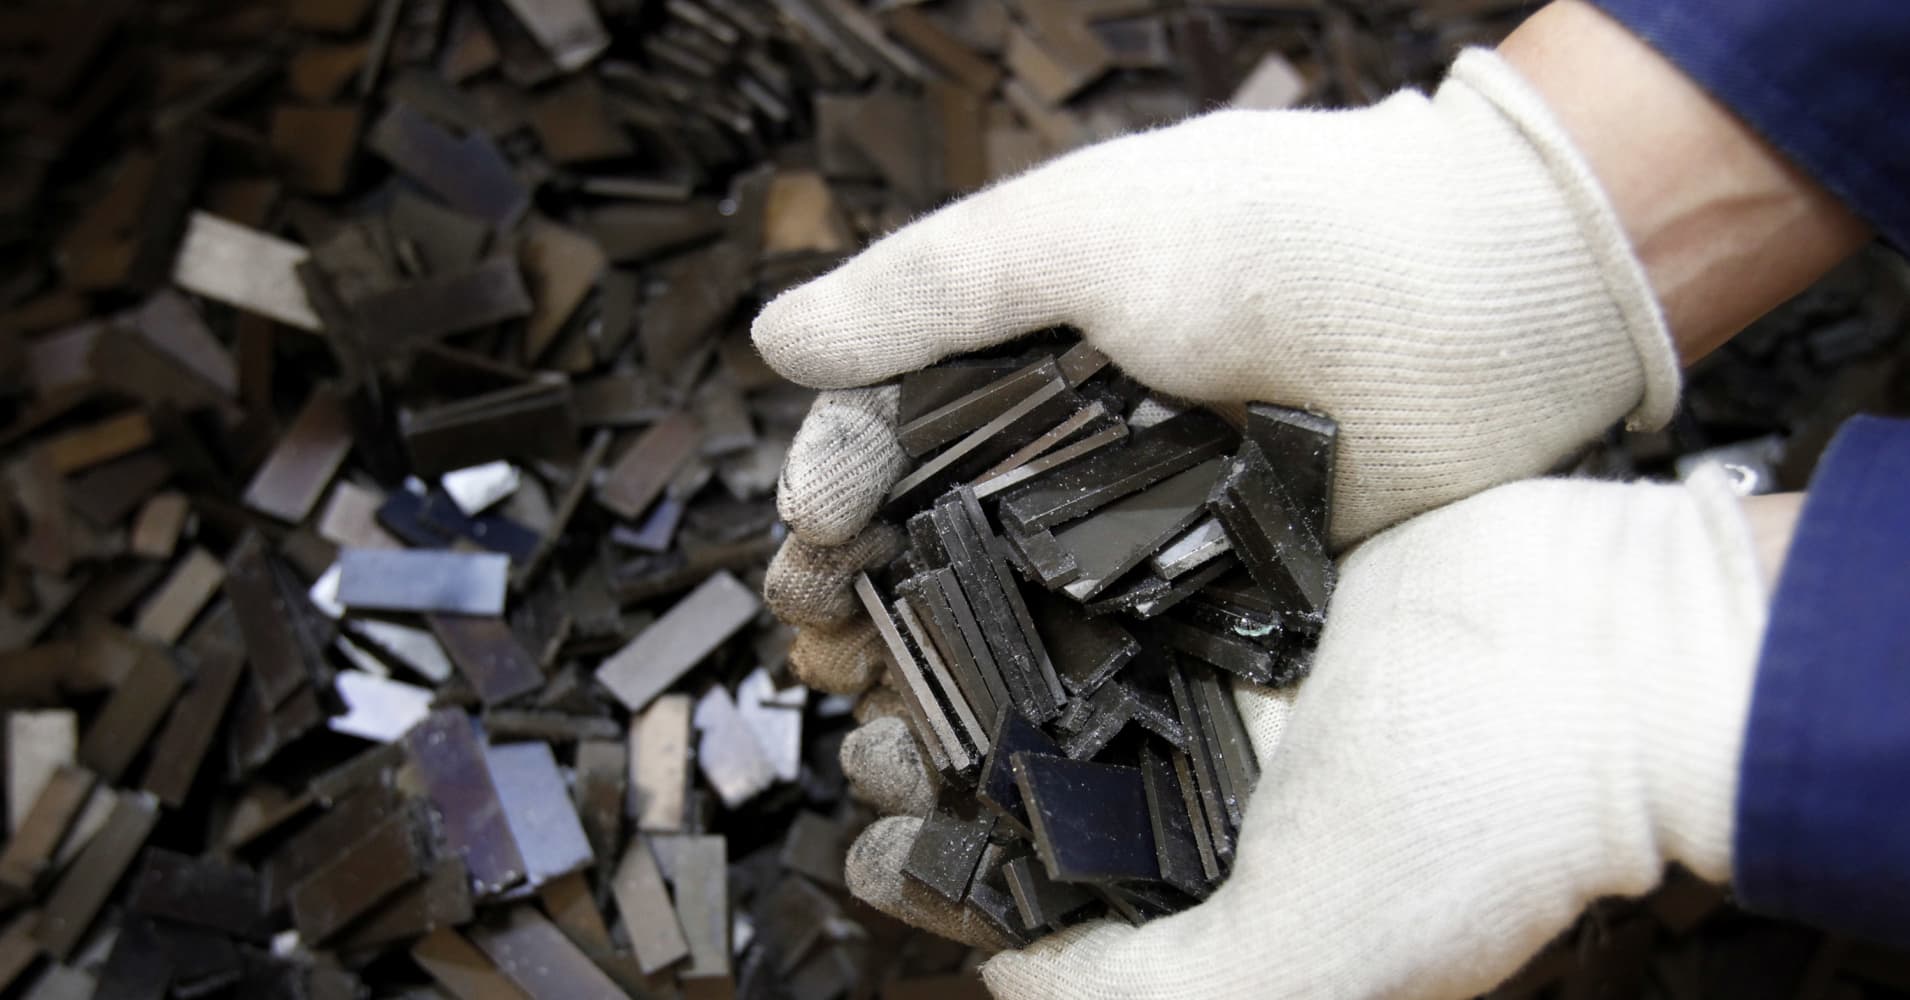 Japan rare earths: Huge deposit of metals found in Pacific